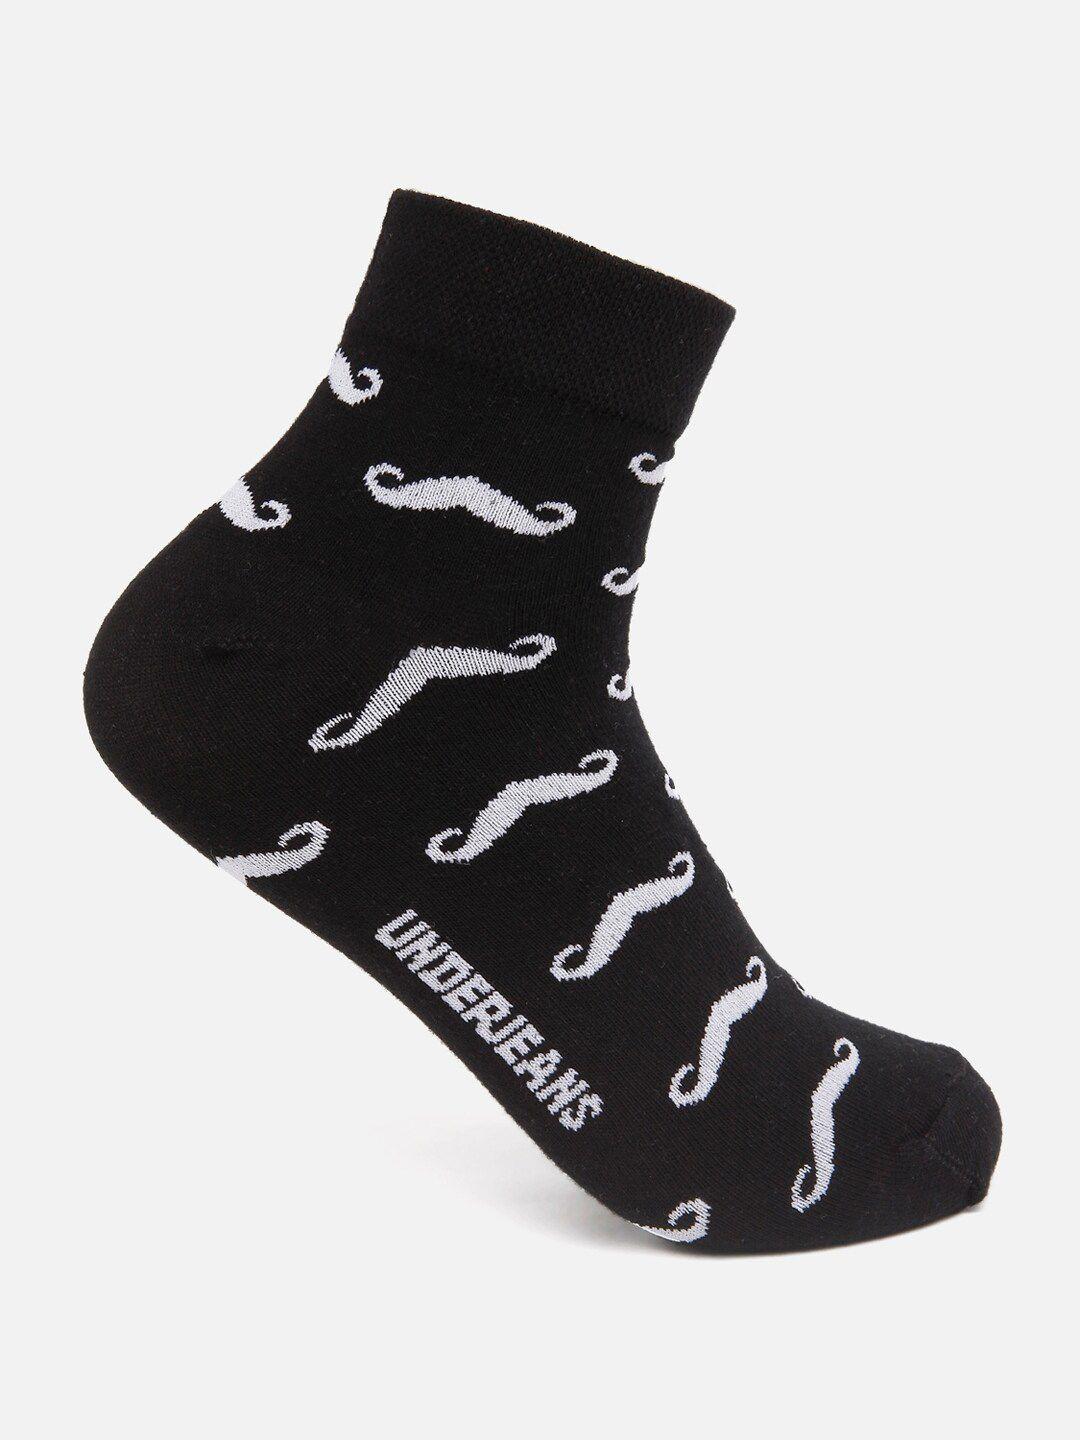 underjeans-by-spykar-men-black-&-white-patterned-cotton-ankle-length-socks